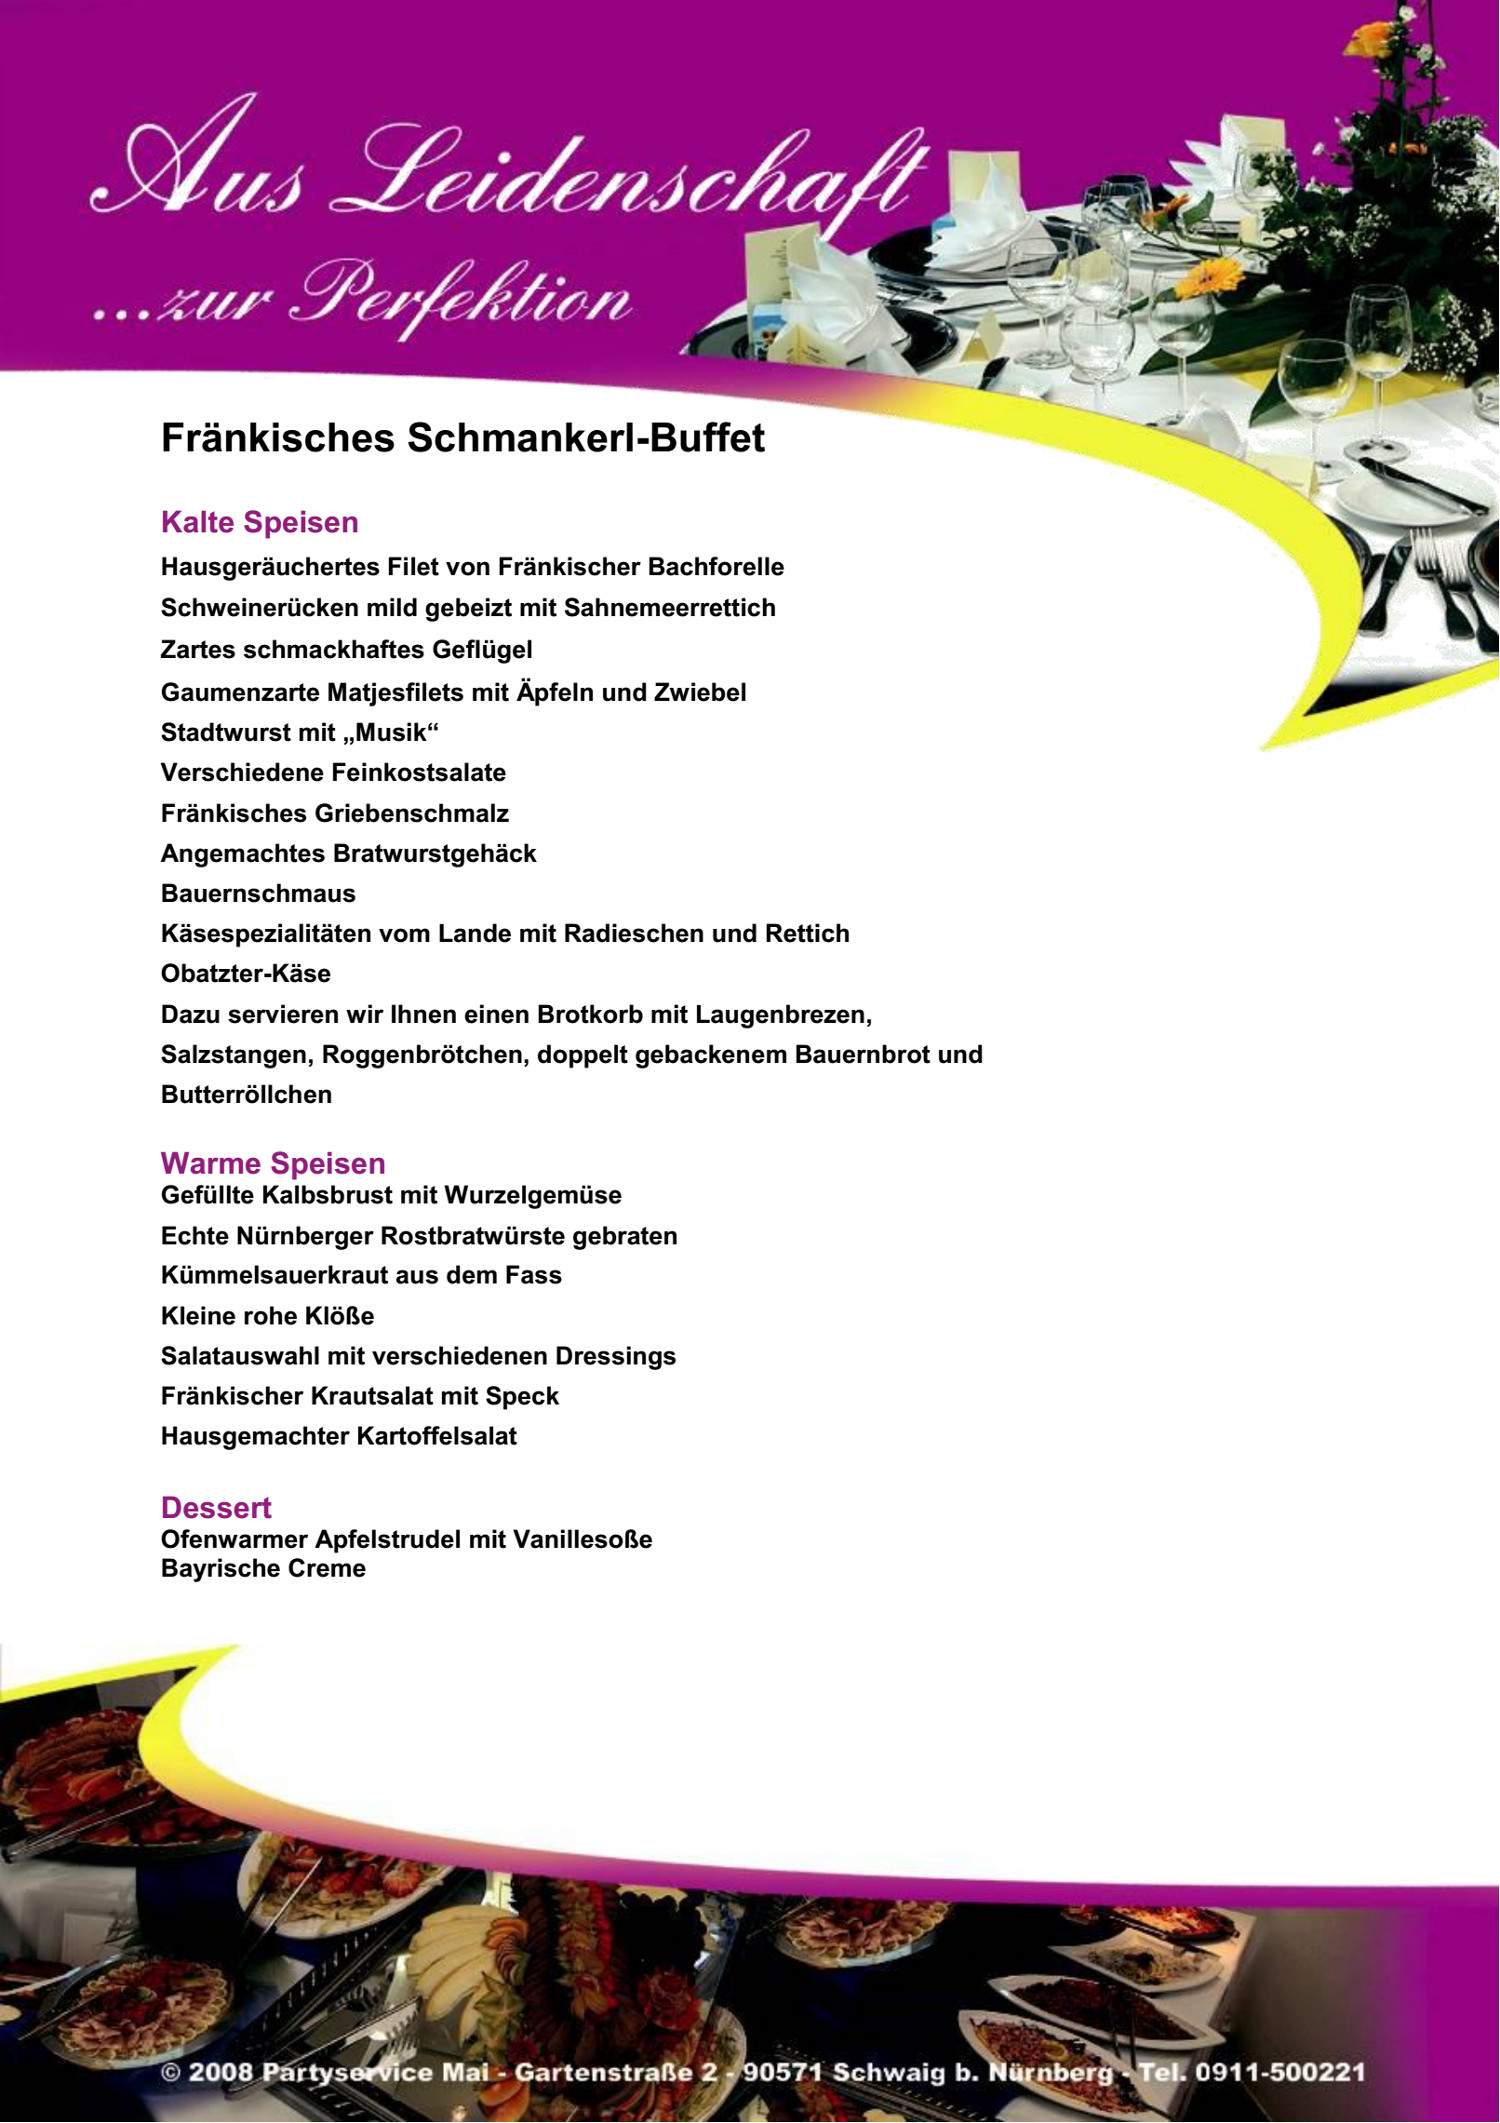 Fränkisches Schmankerl-Buffet